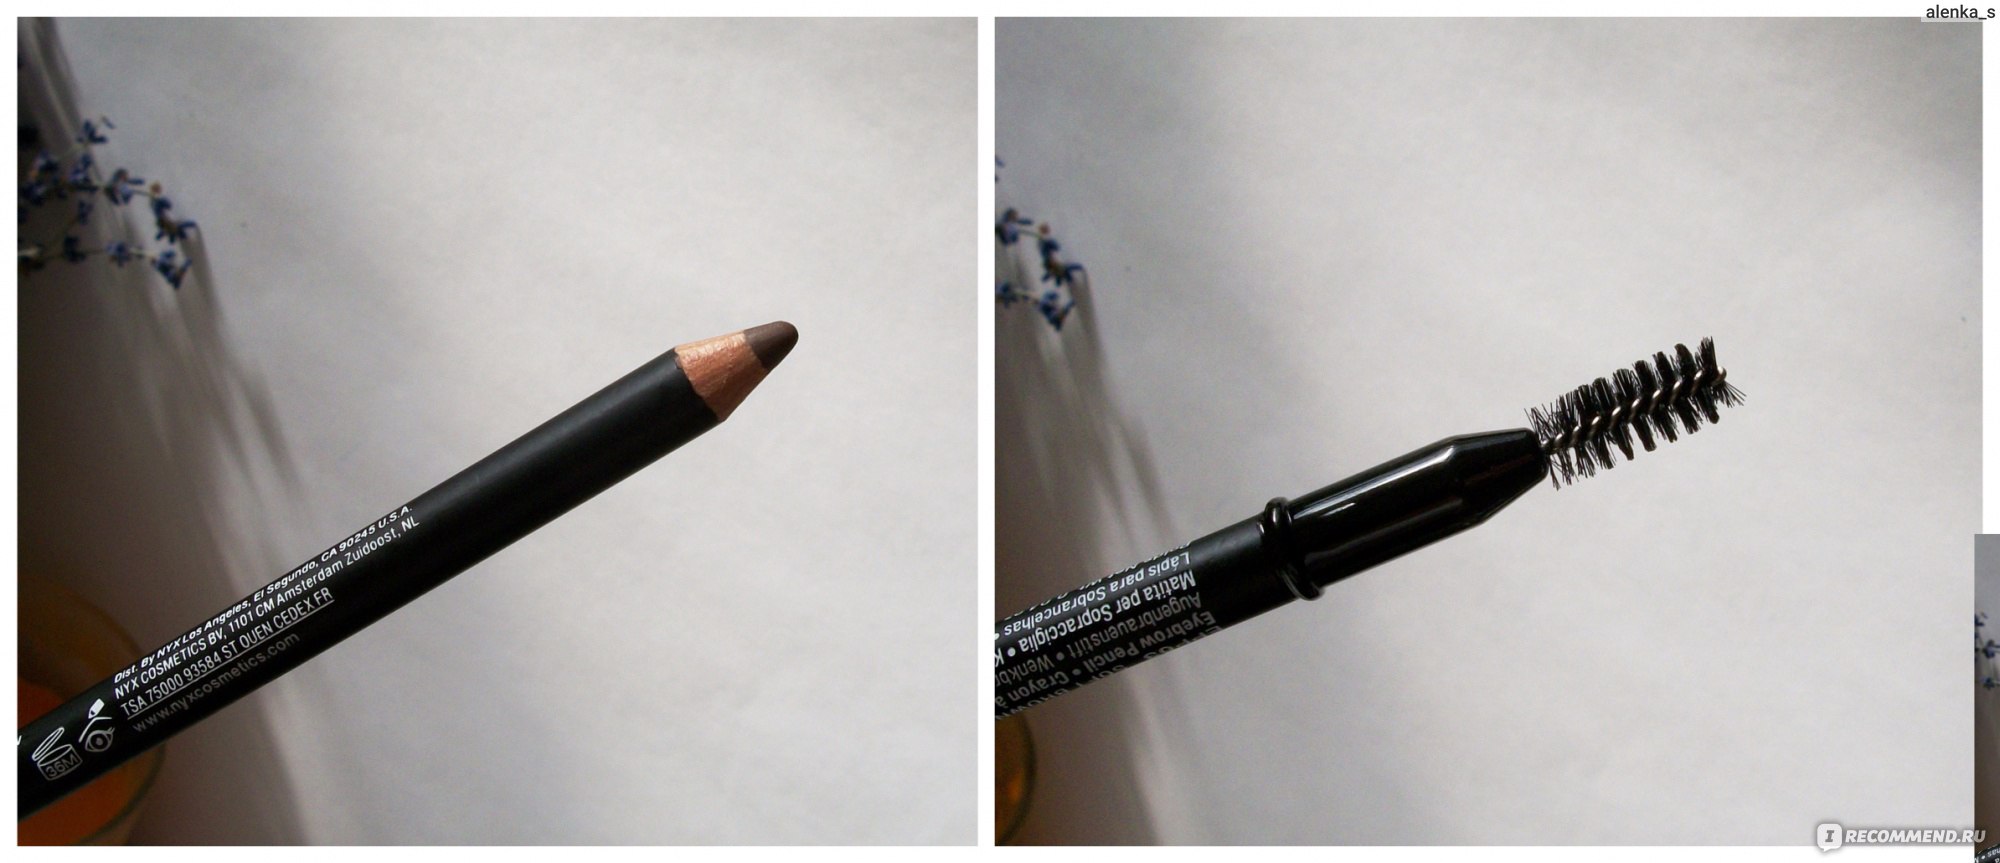 NYX Eyebrow Powder Pencil